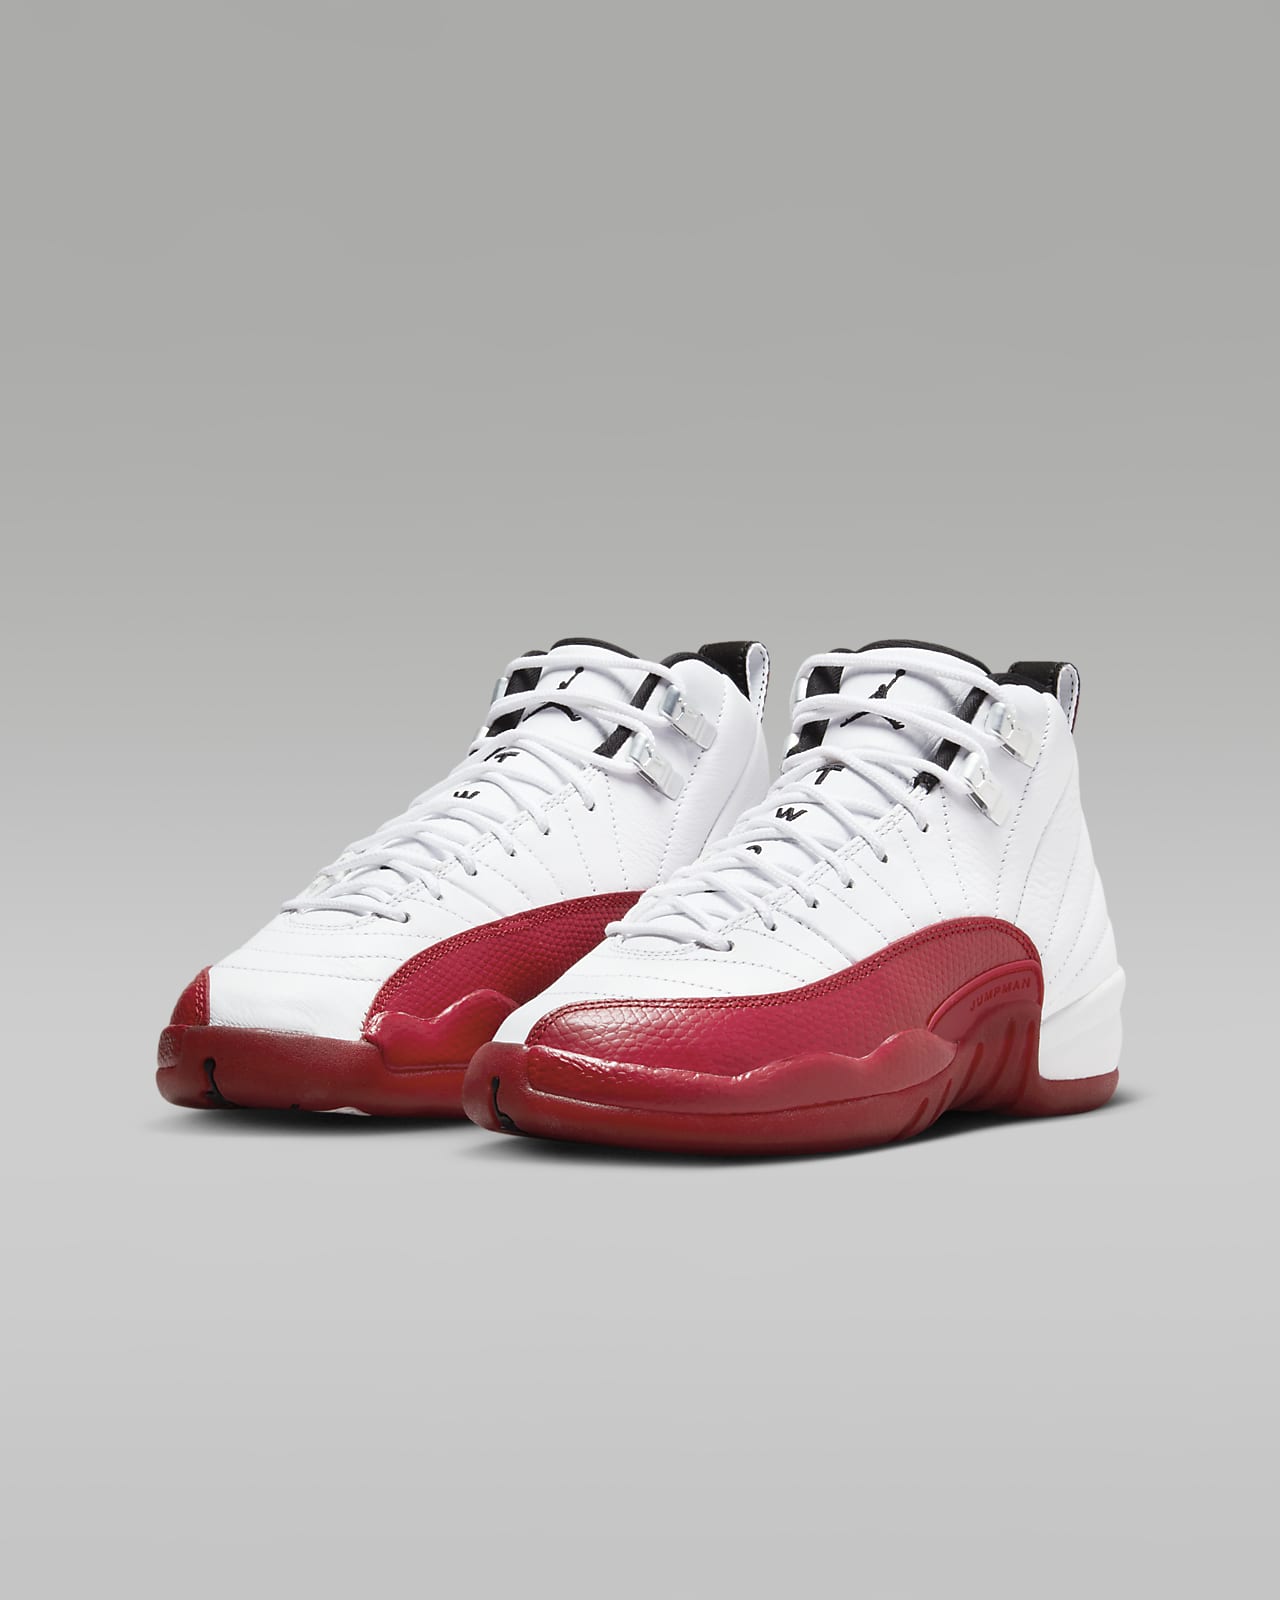 Air Jordan 12 Retro BG Red White Black Sneakers ~ Size Youth 6.5